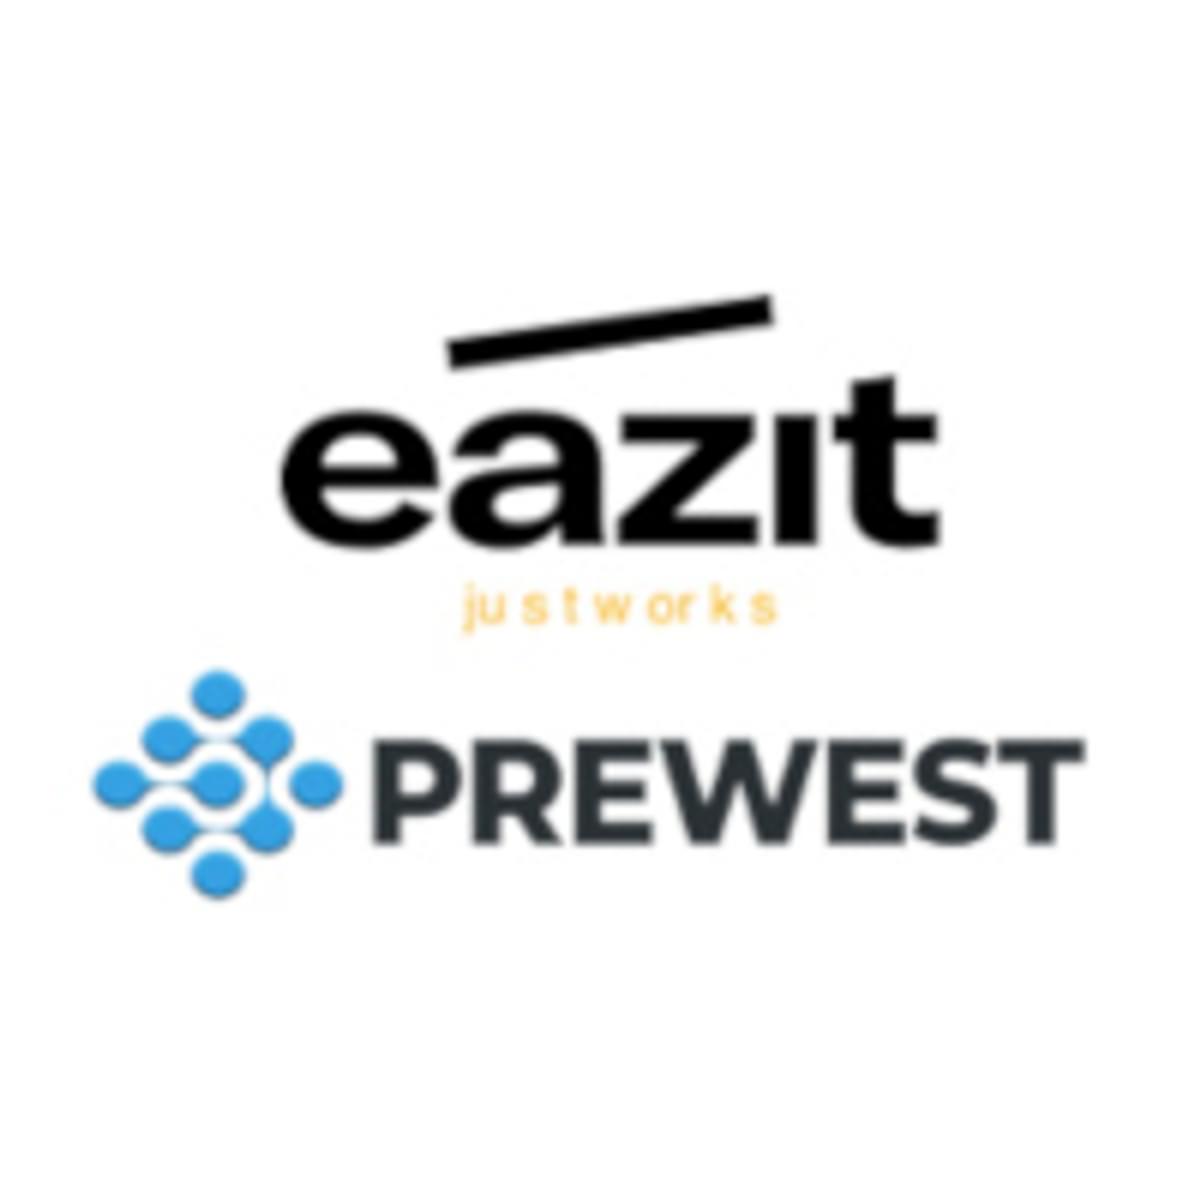 IT-, internet-, telefonie- en netwerkdiensten van Prewest worden onderdeel van Eazit image